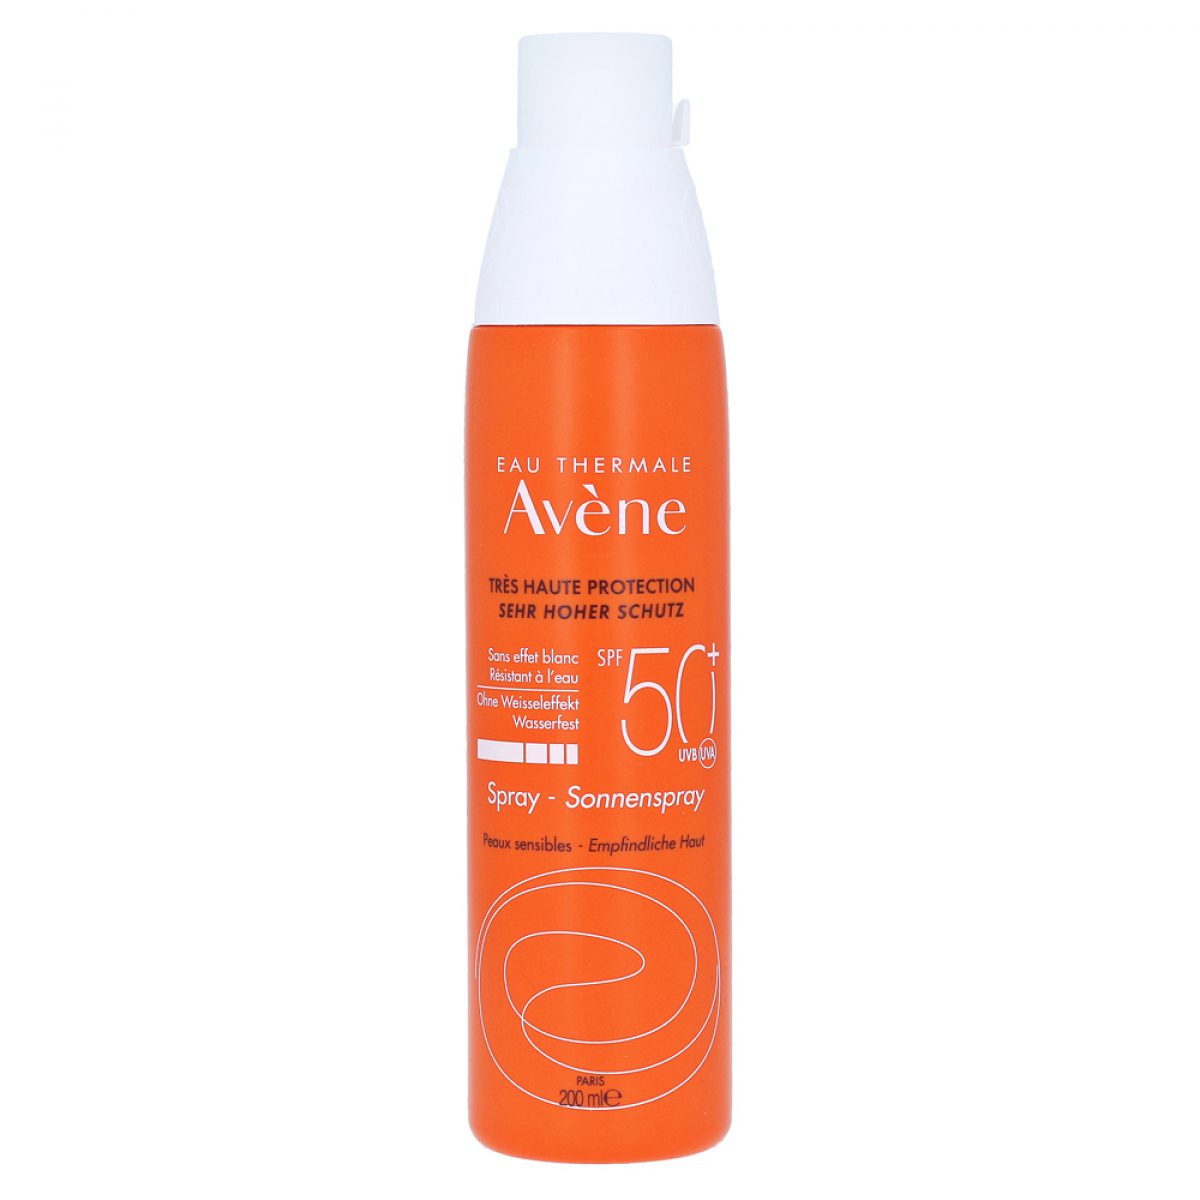 Avene - SPF 50+ Face And Body Spray *200 ml